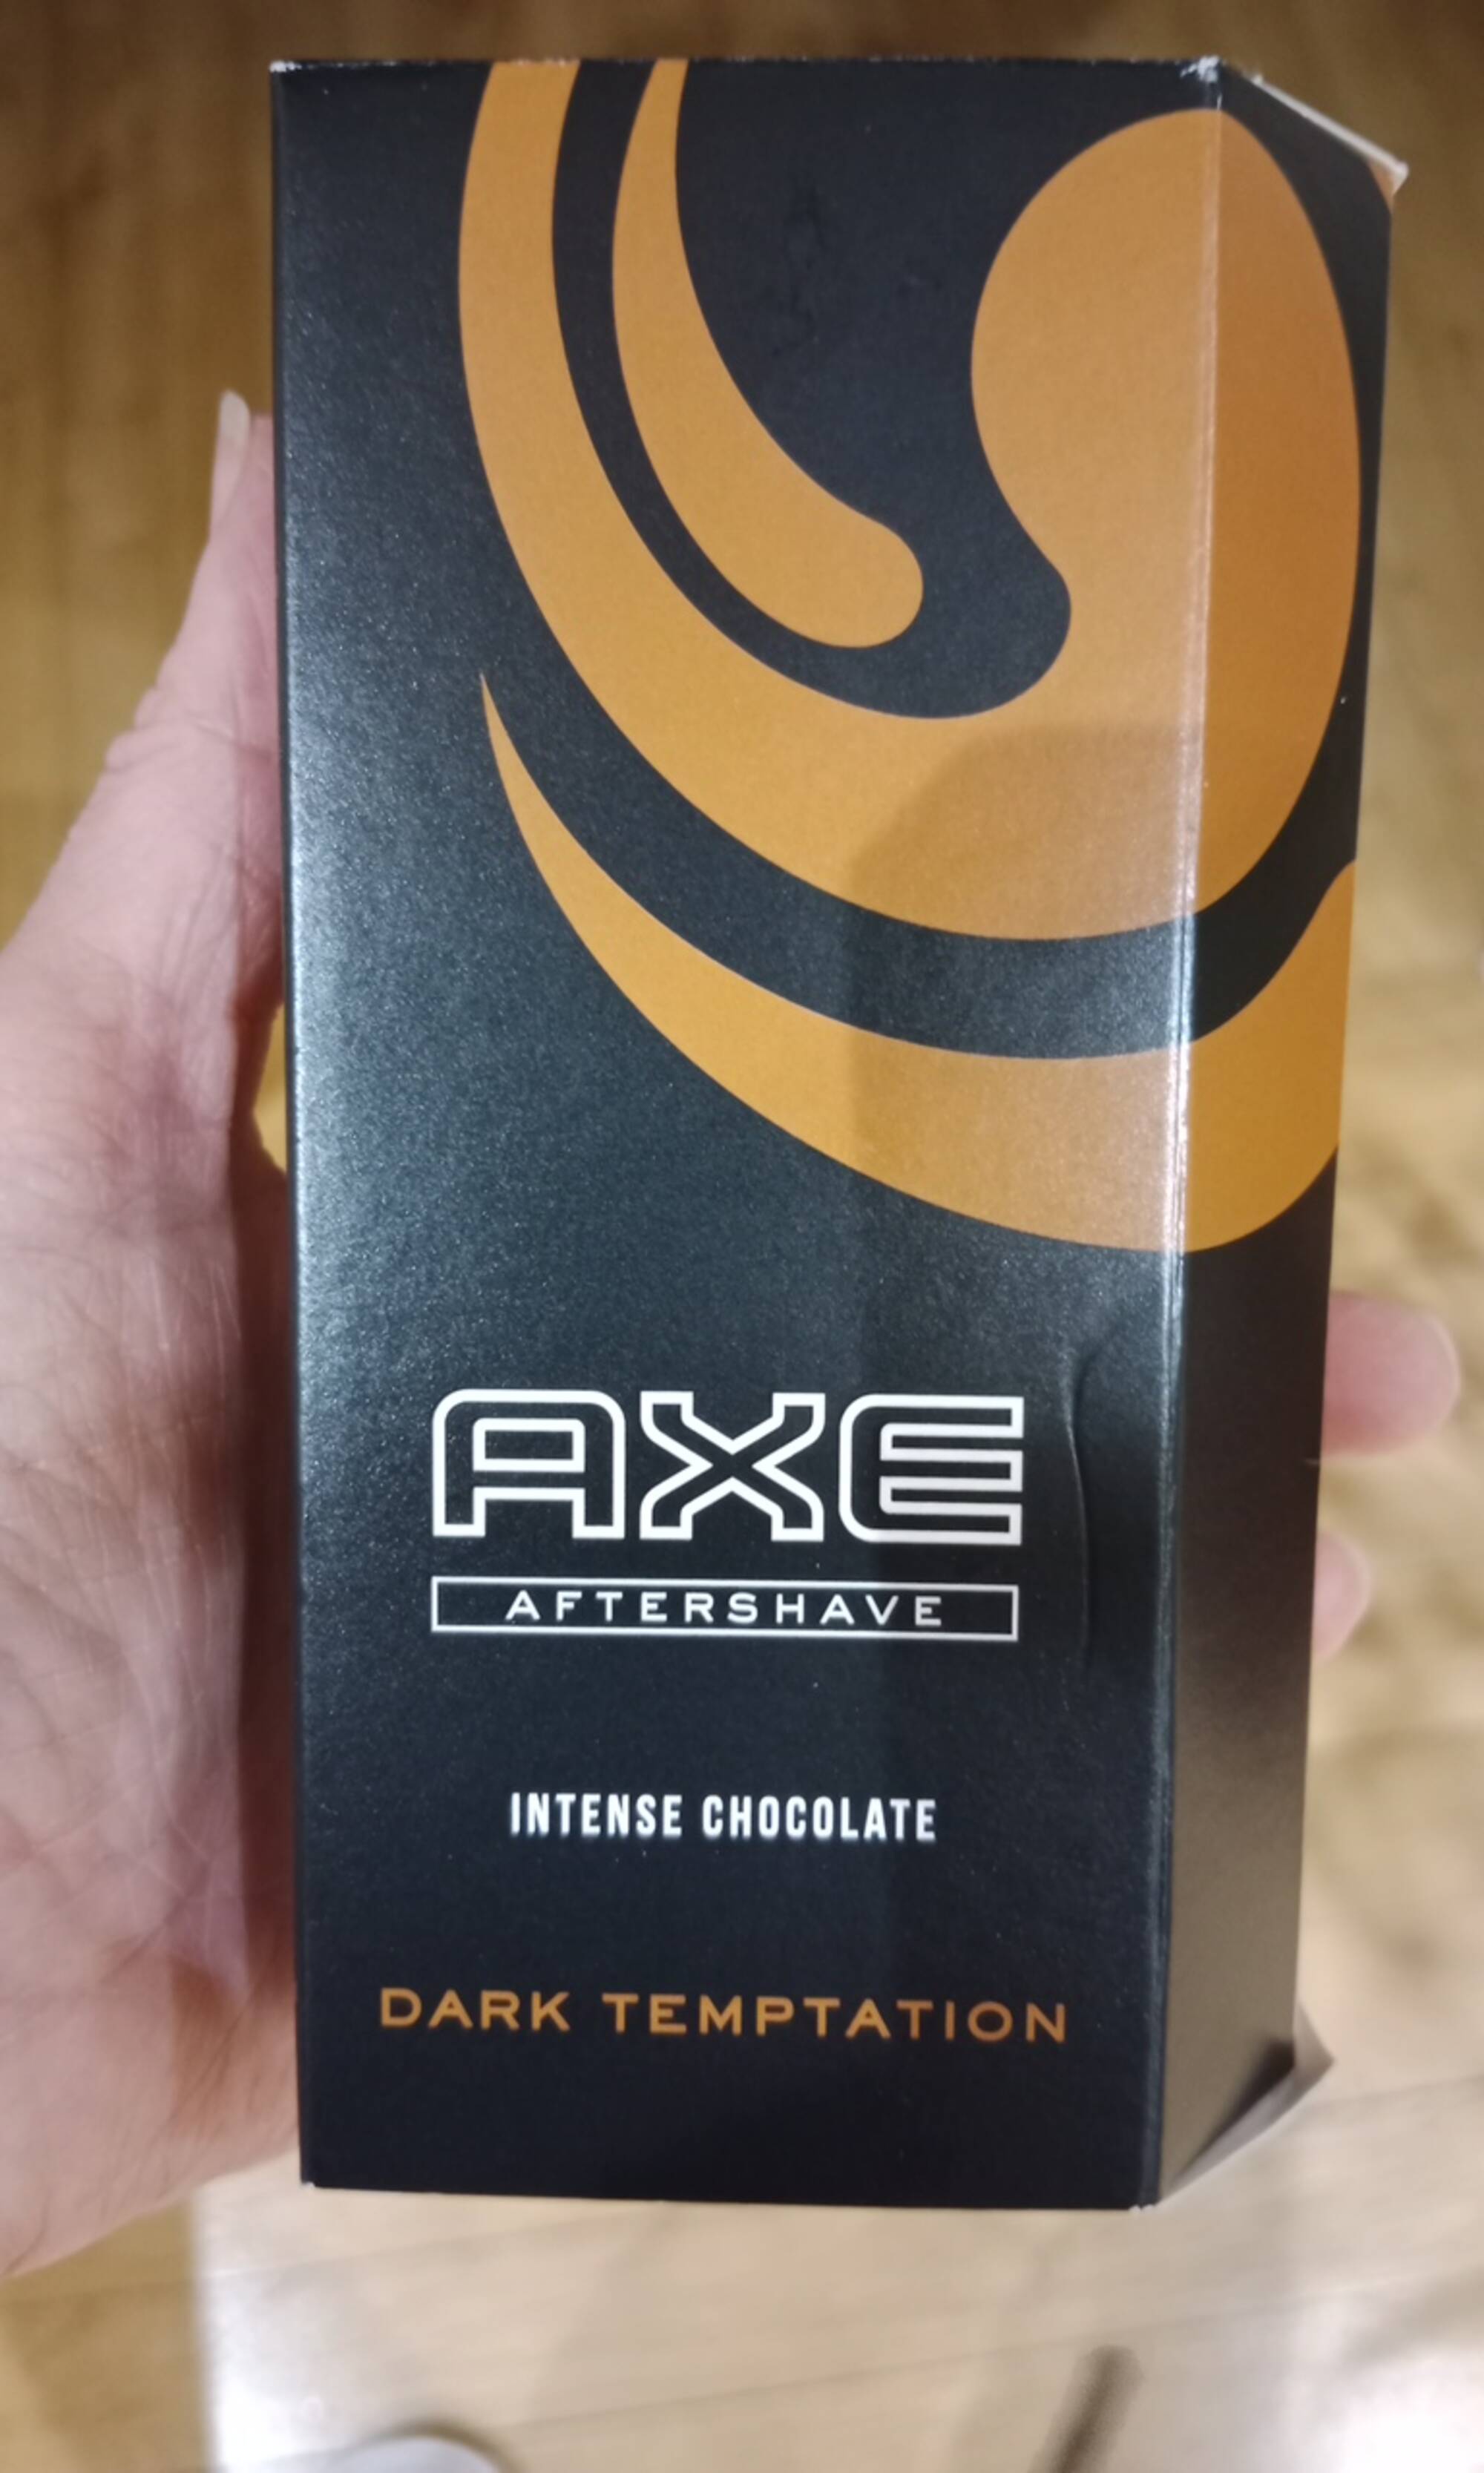 AXE - Dark temptation - After shave intense chocolate